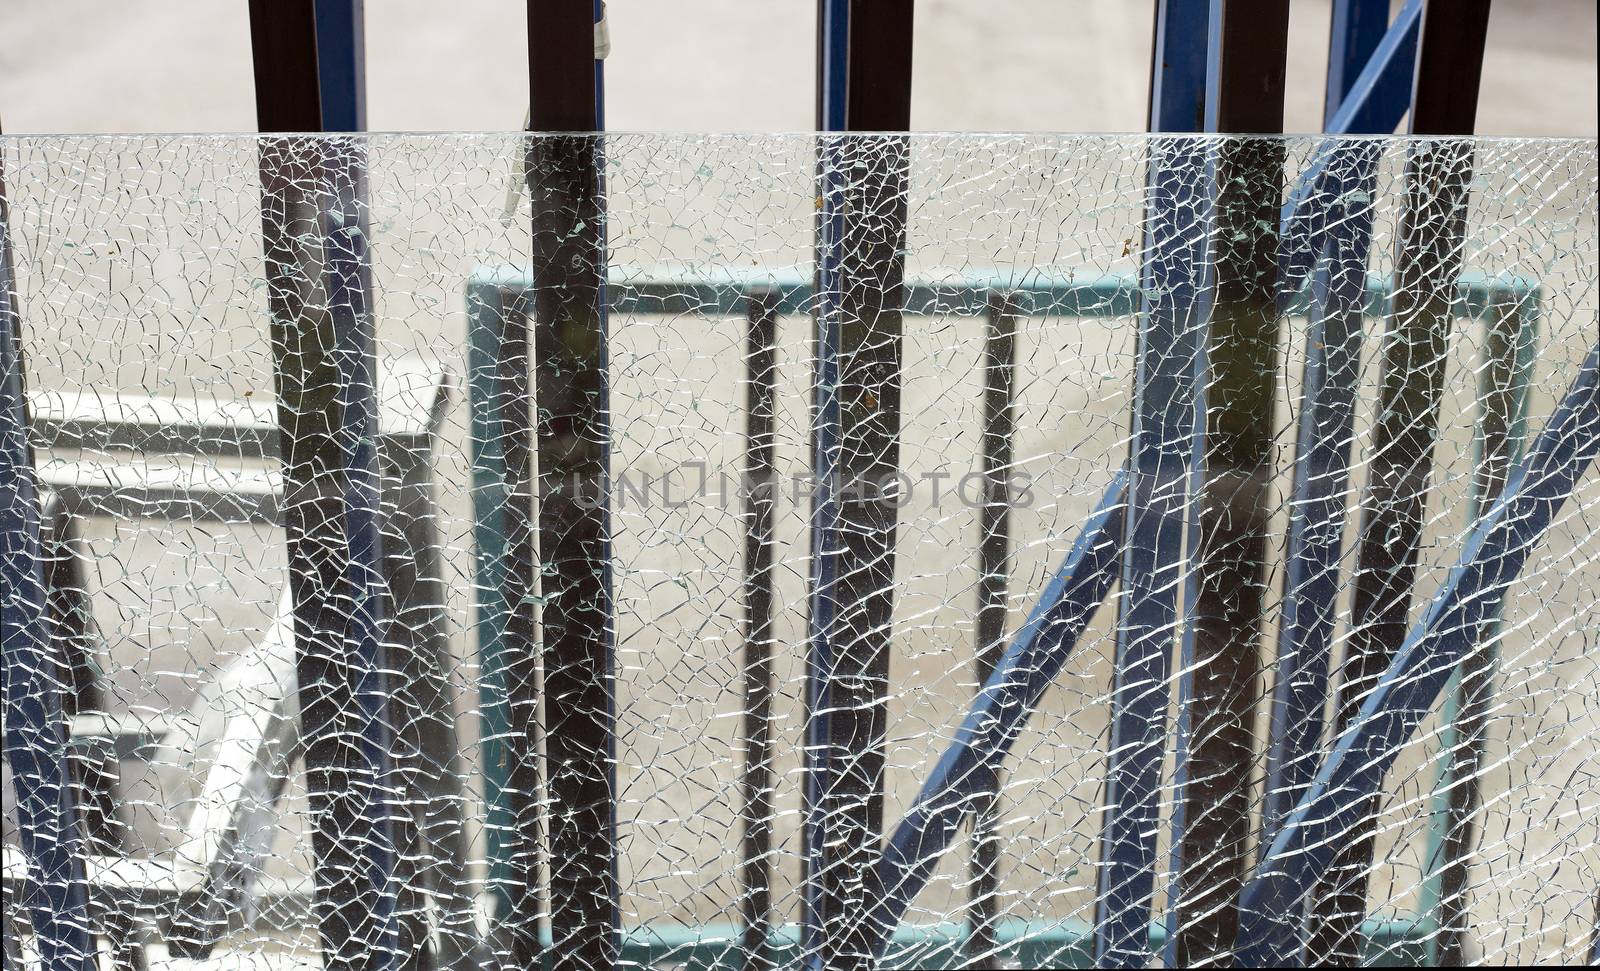 Broken safety glass on a metal frame.